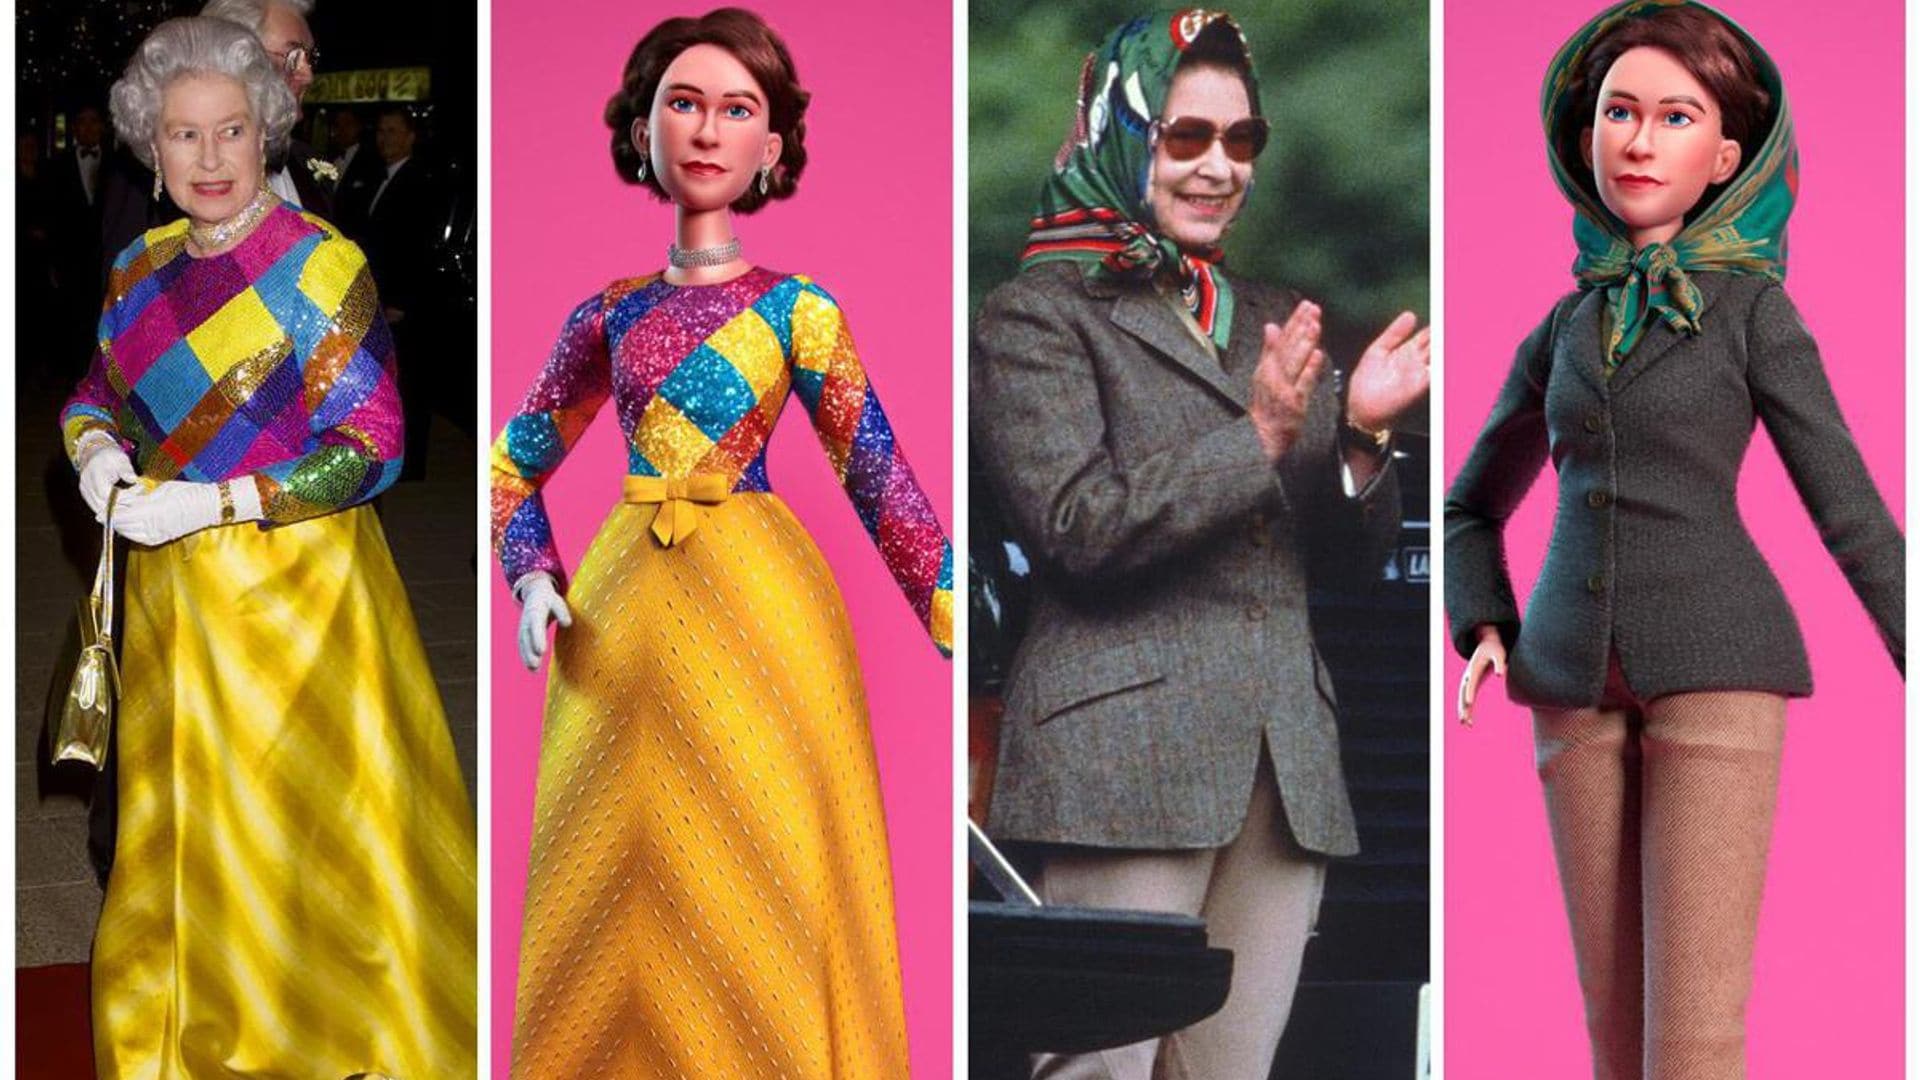 7 iconic Queen Elizabeth II looks reimagined as Barbie